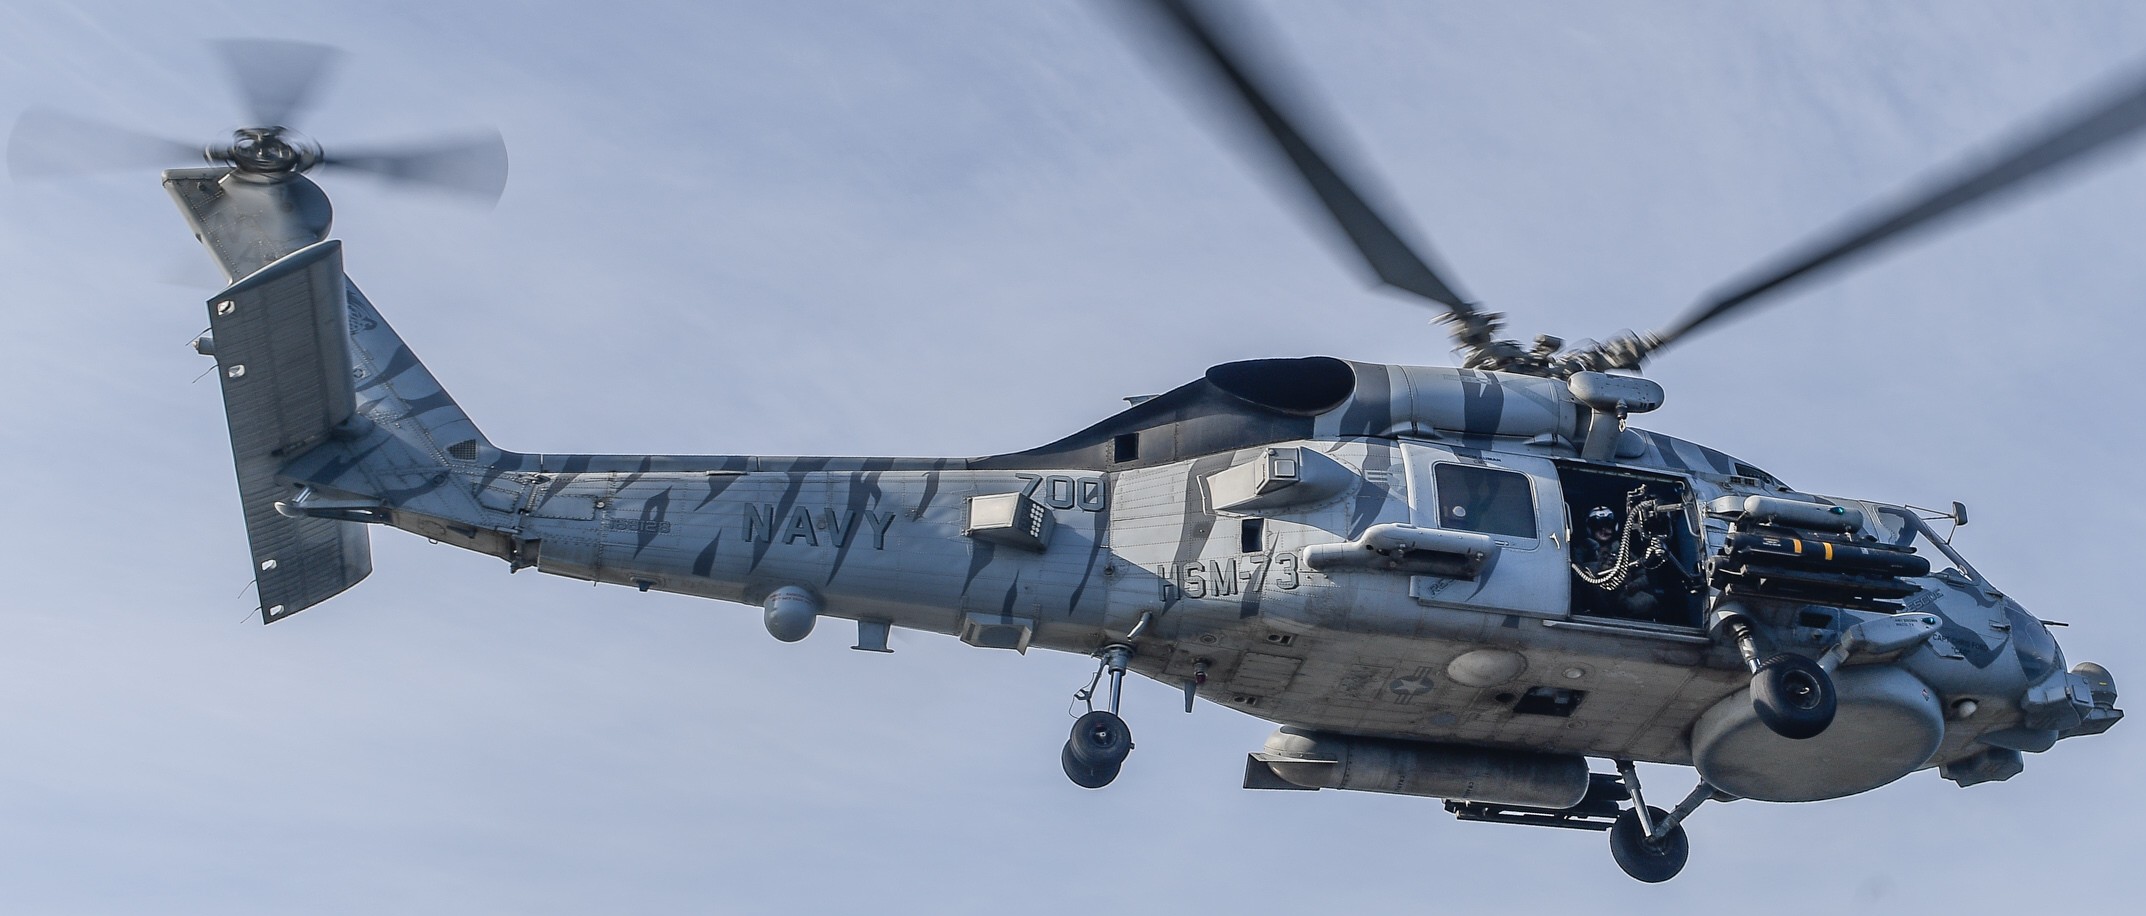 hsm-73 battlecats helicopter maritime strike squadron mh-60r seahawk cvw-17 cvn-71 uss theodore roosevelt 15